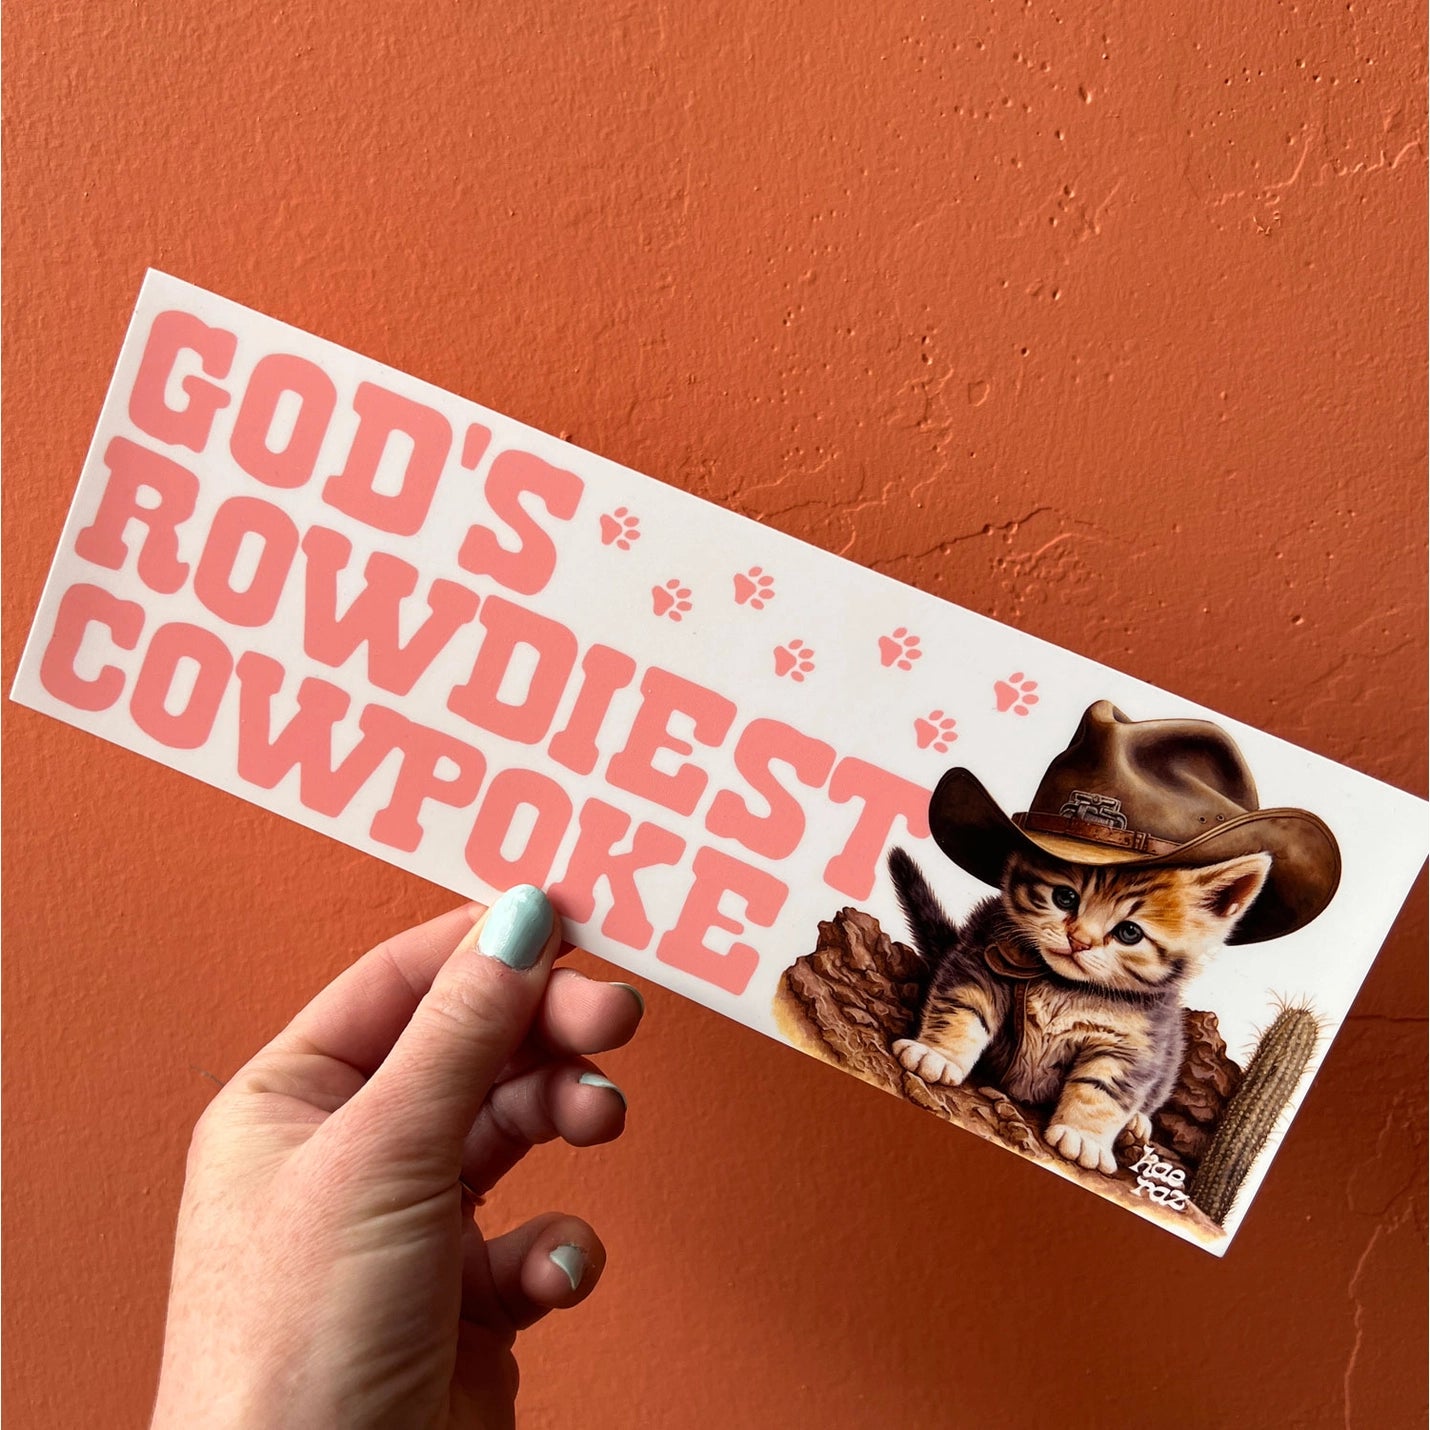 Rowdiest Cowpoke Bumper Sticker